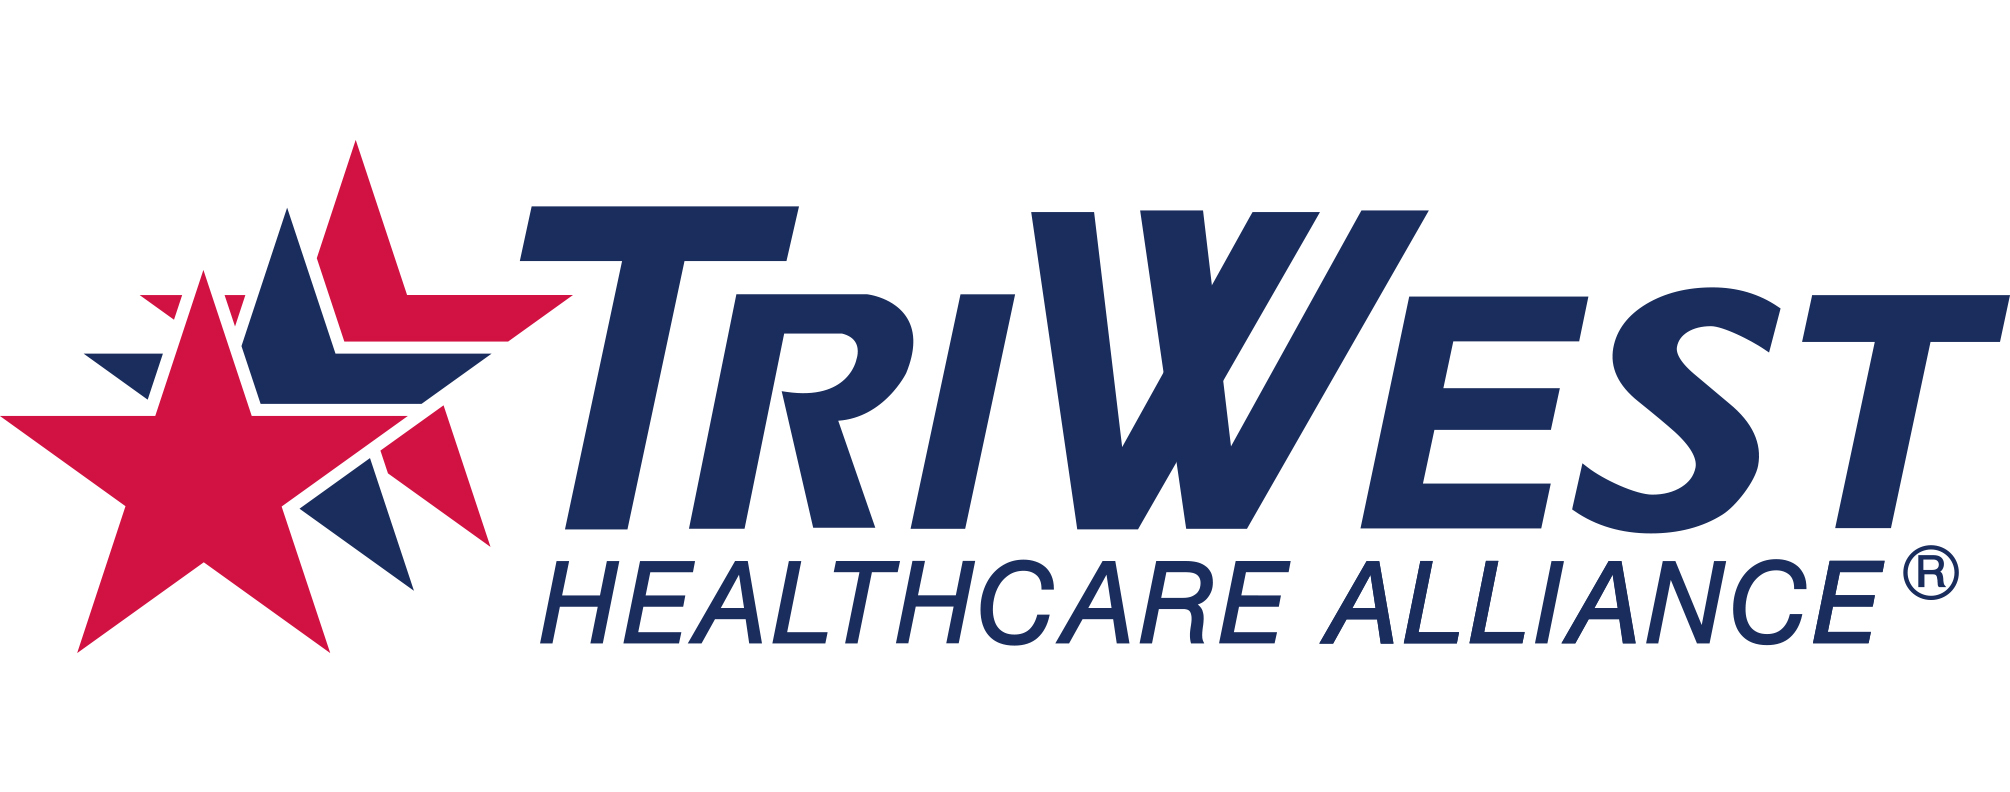 TriWest Healthcare Alliance Logo photo - 1